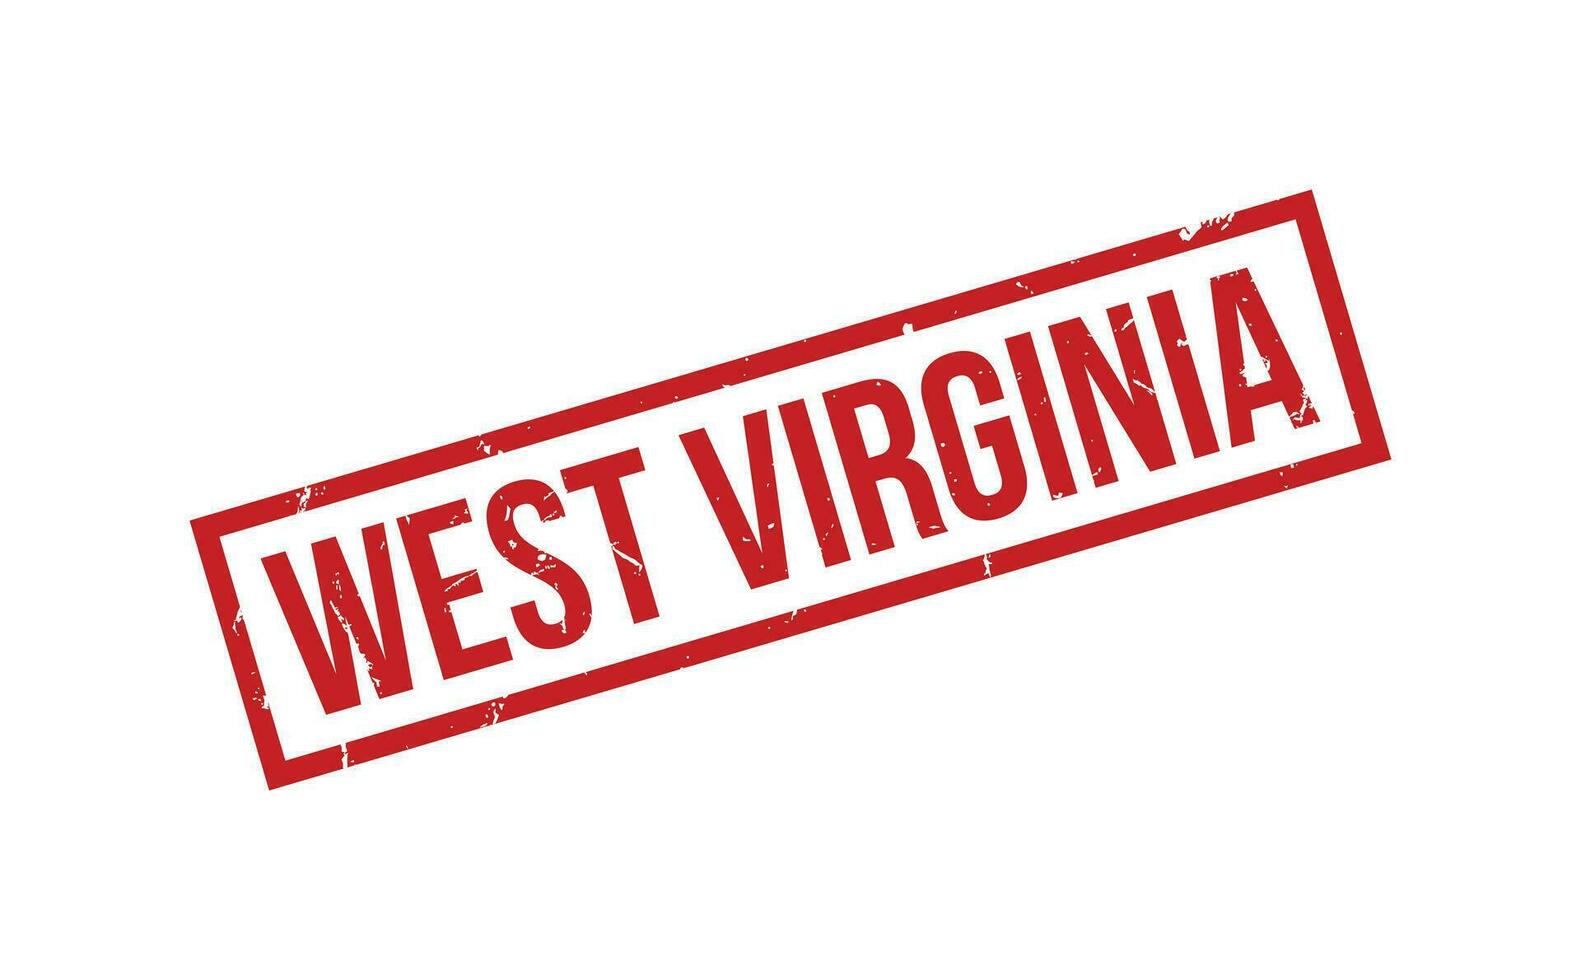 Westen Virginia Gummi Briefmarke Siegel Vektor